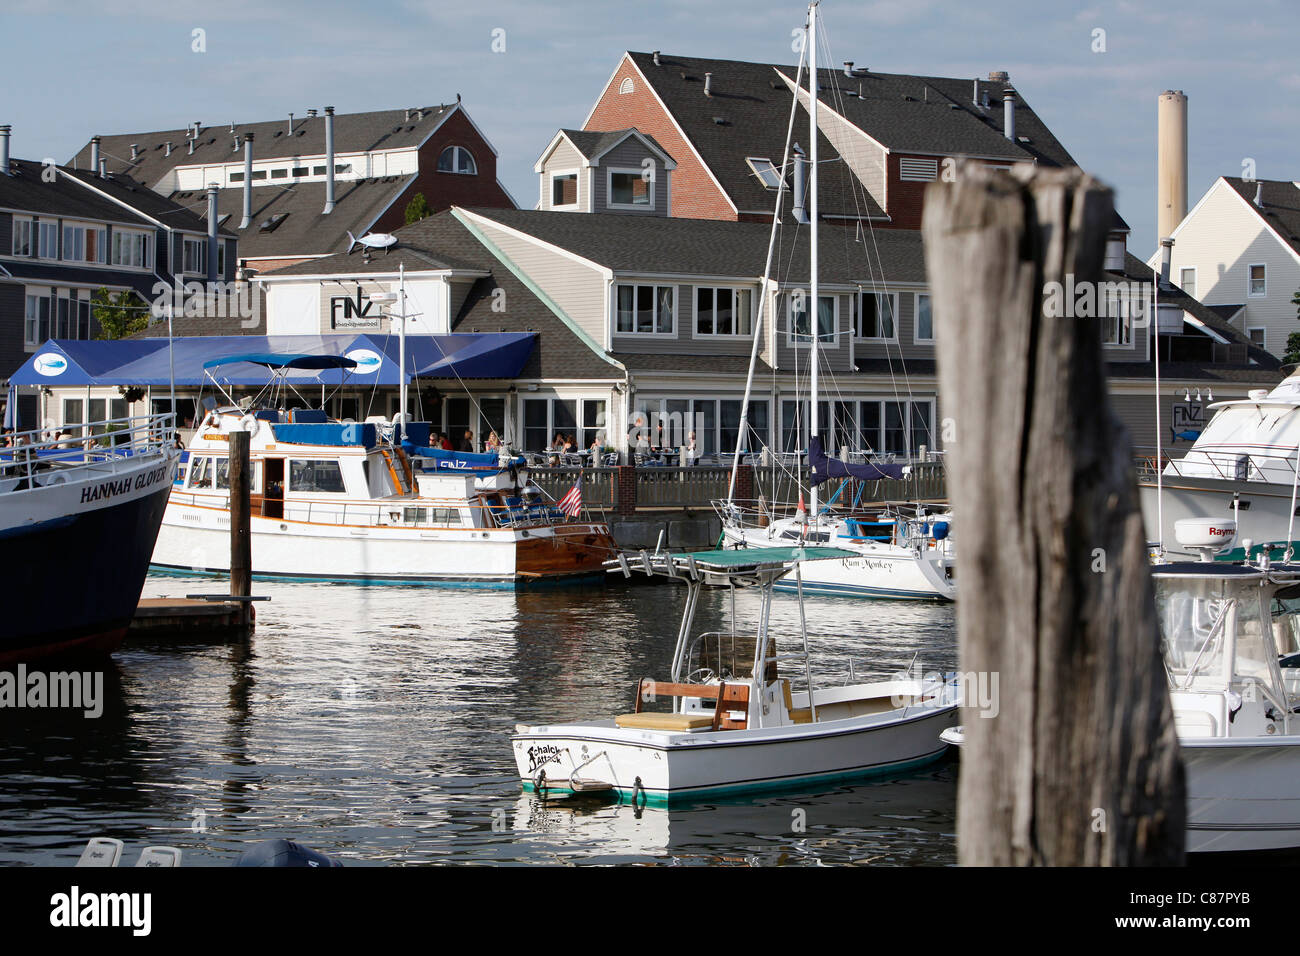 Boats in the harbor, Salem, Massachusetts Stock Photo